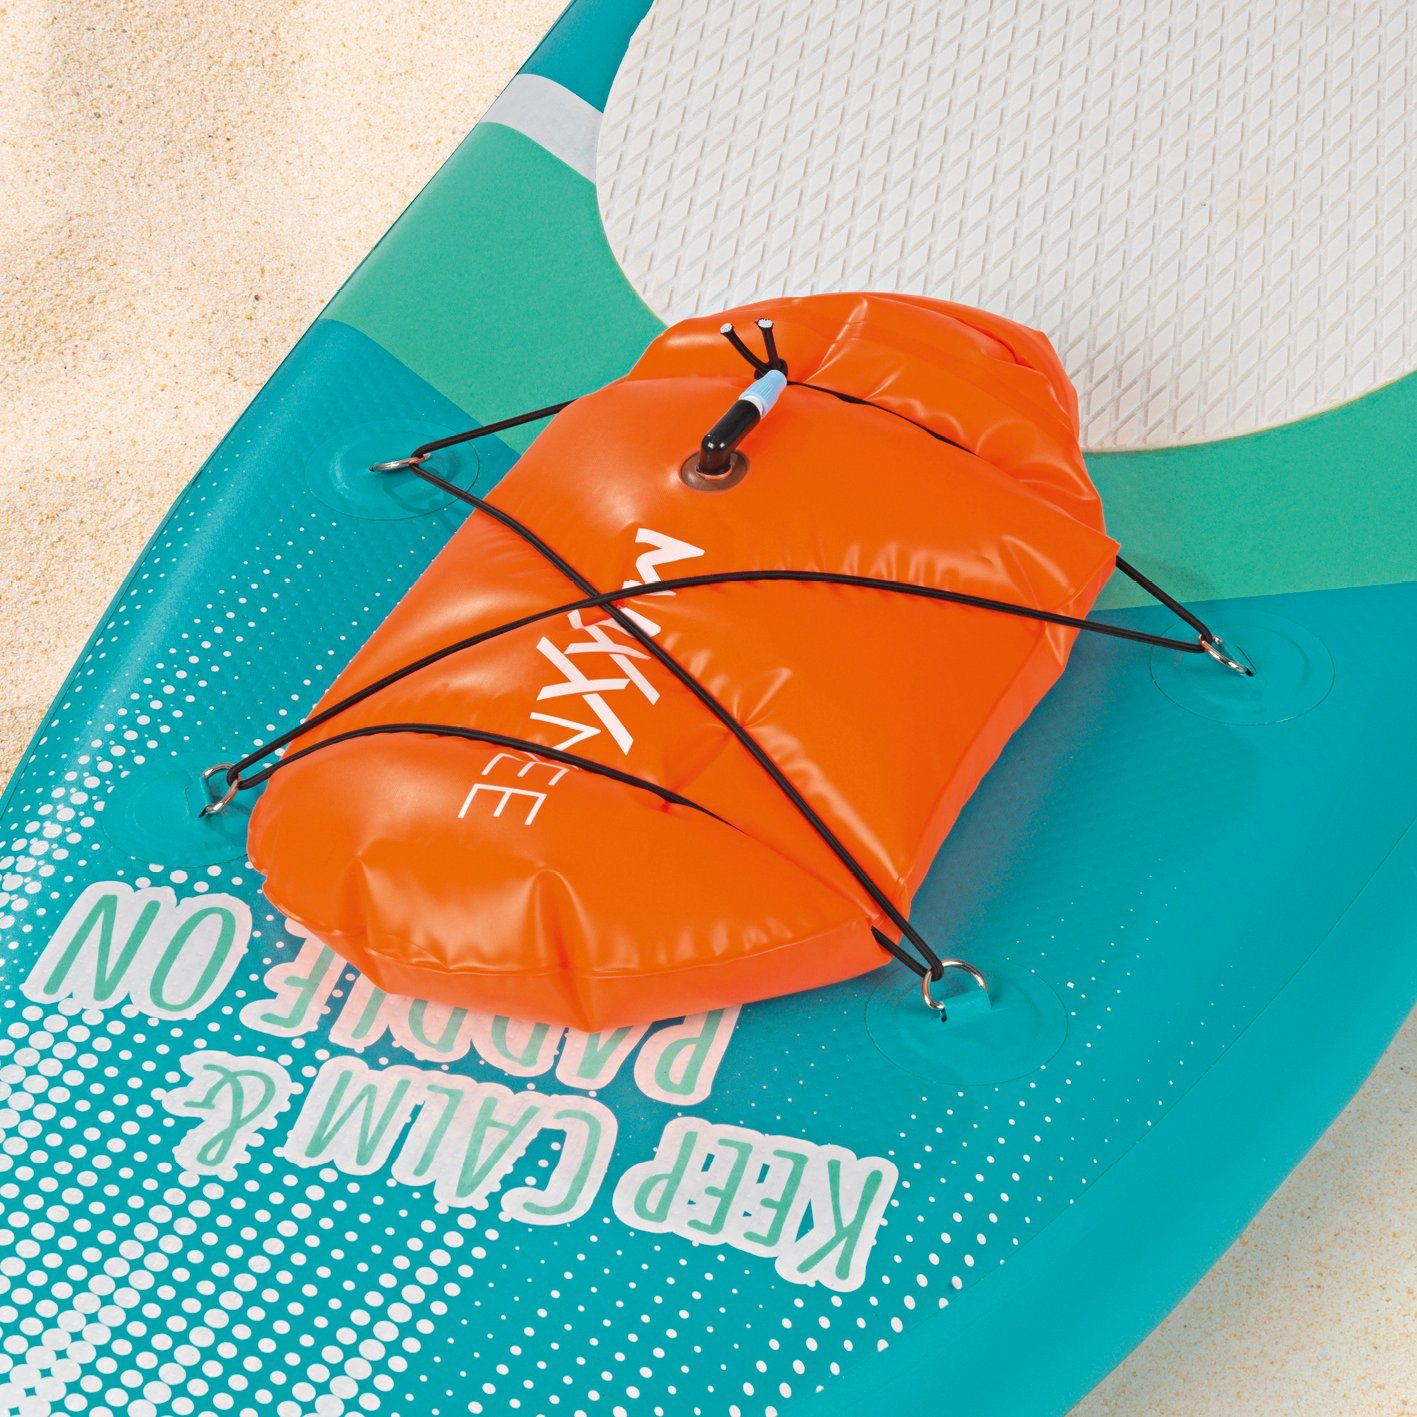 MAXXMEE Inflatable SUP-Board inkl. Stand-Up SUP Paddel türkis/weiß Paddle-Board up Komplett 110 Set Zubehör, Stand Board Paddling cm, 300 kg